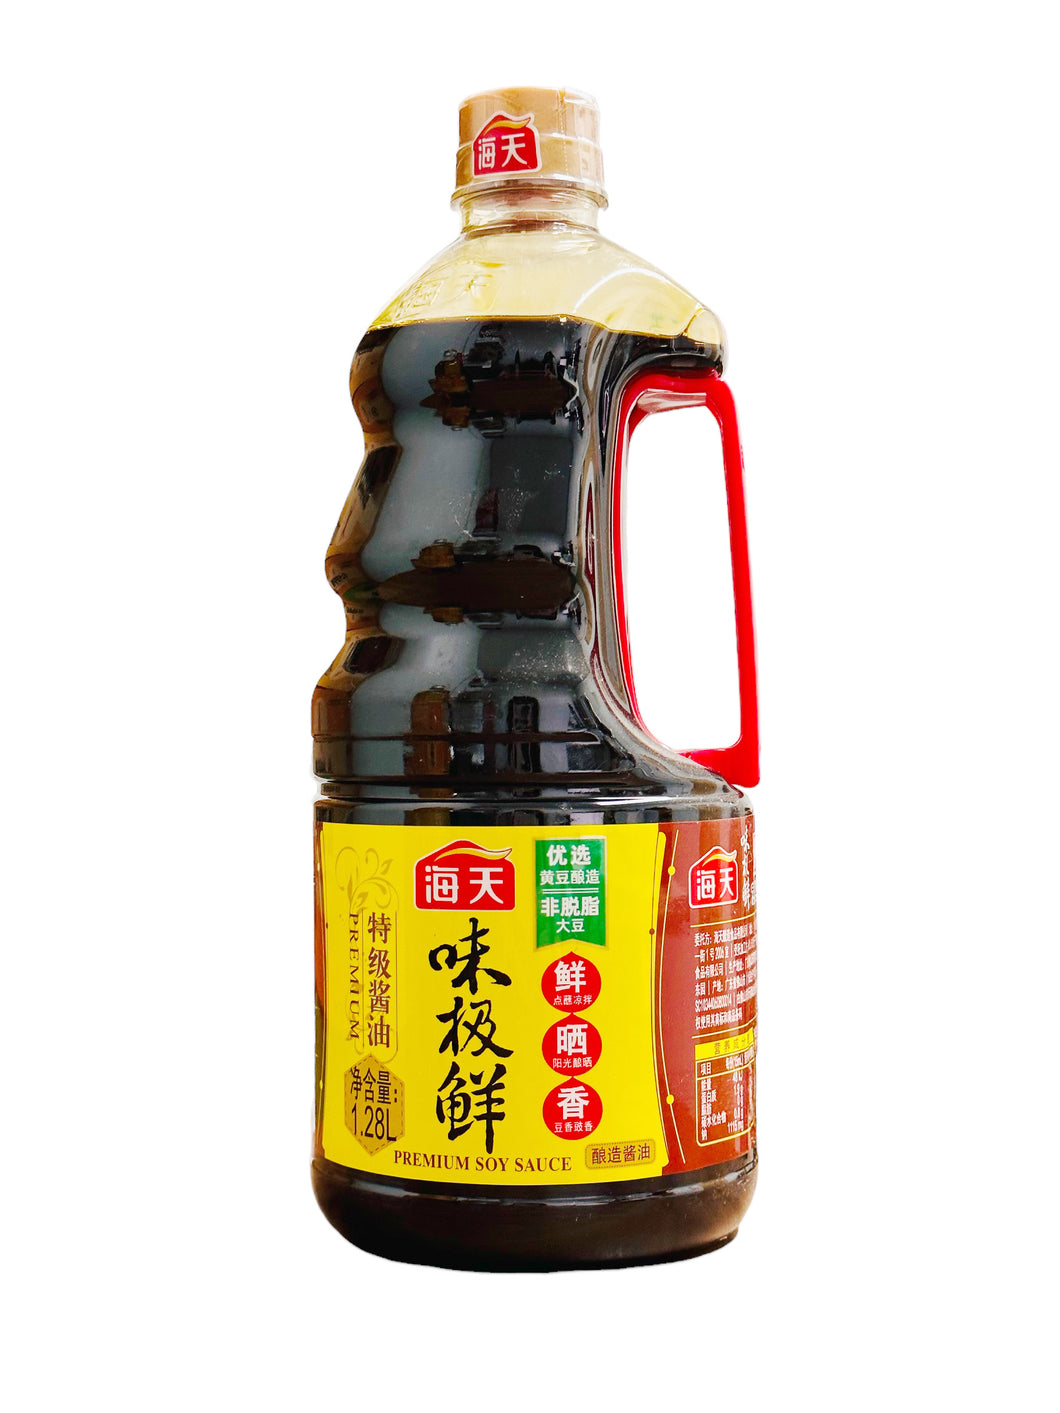 Haday Premium Soy Sauce 1.28L海天味极鲜